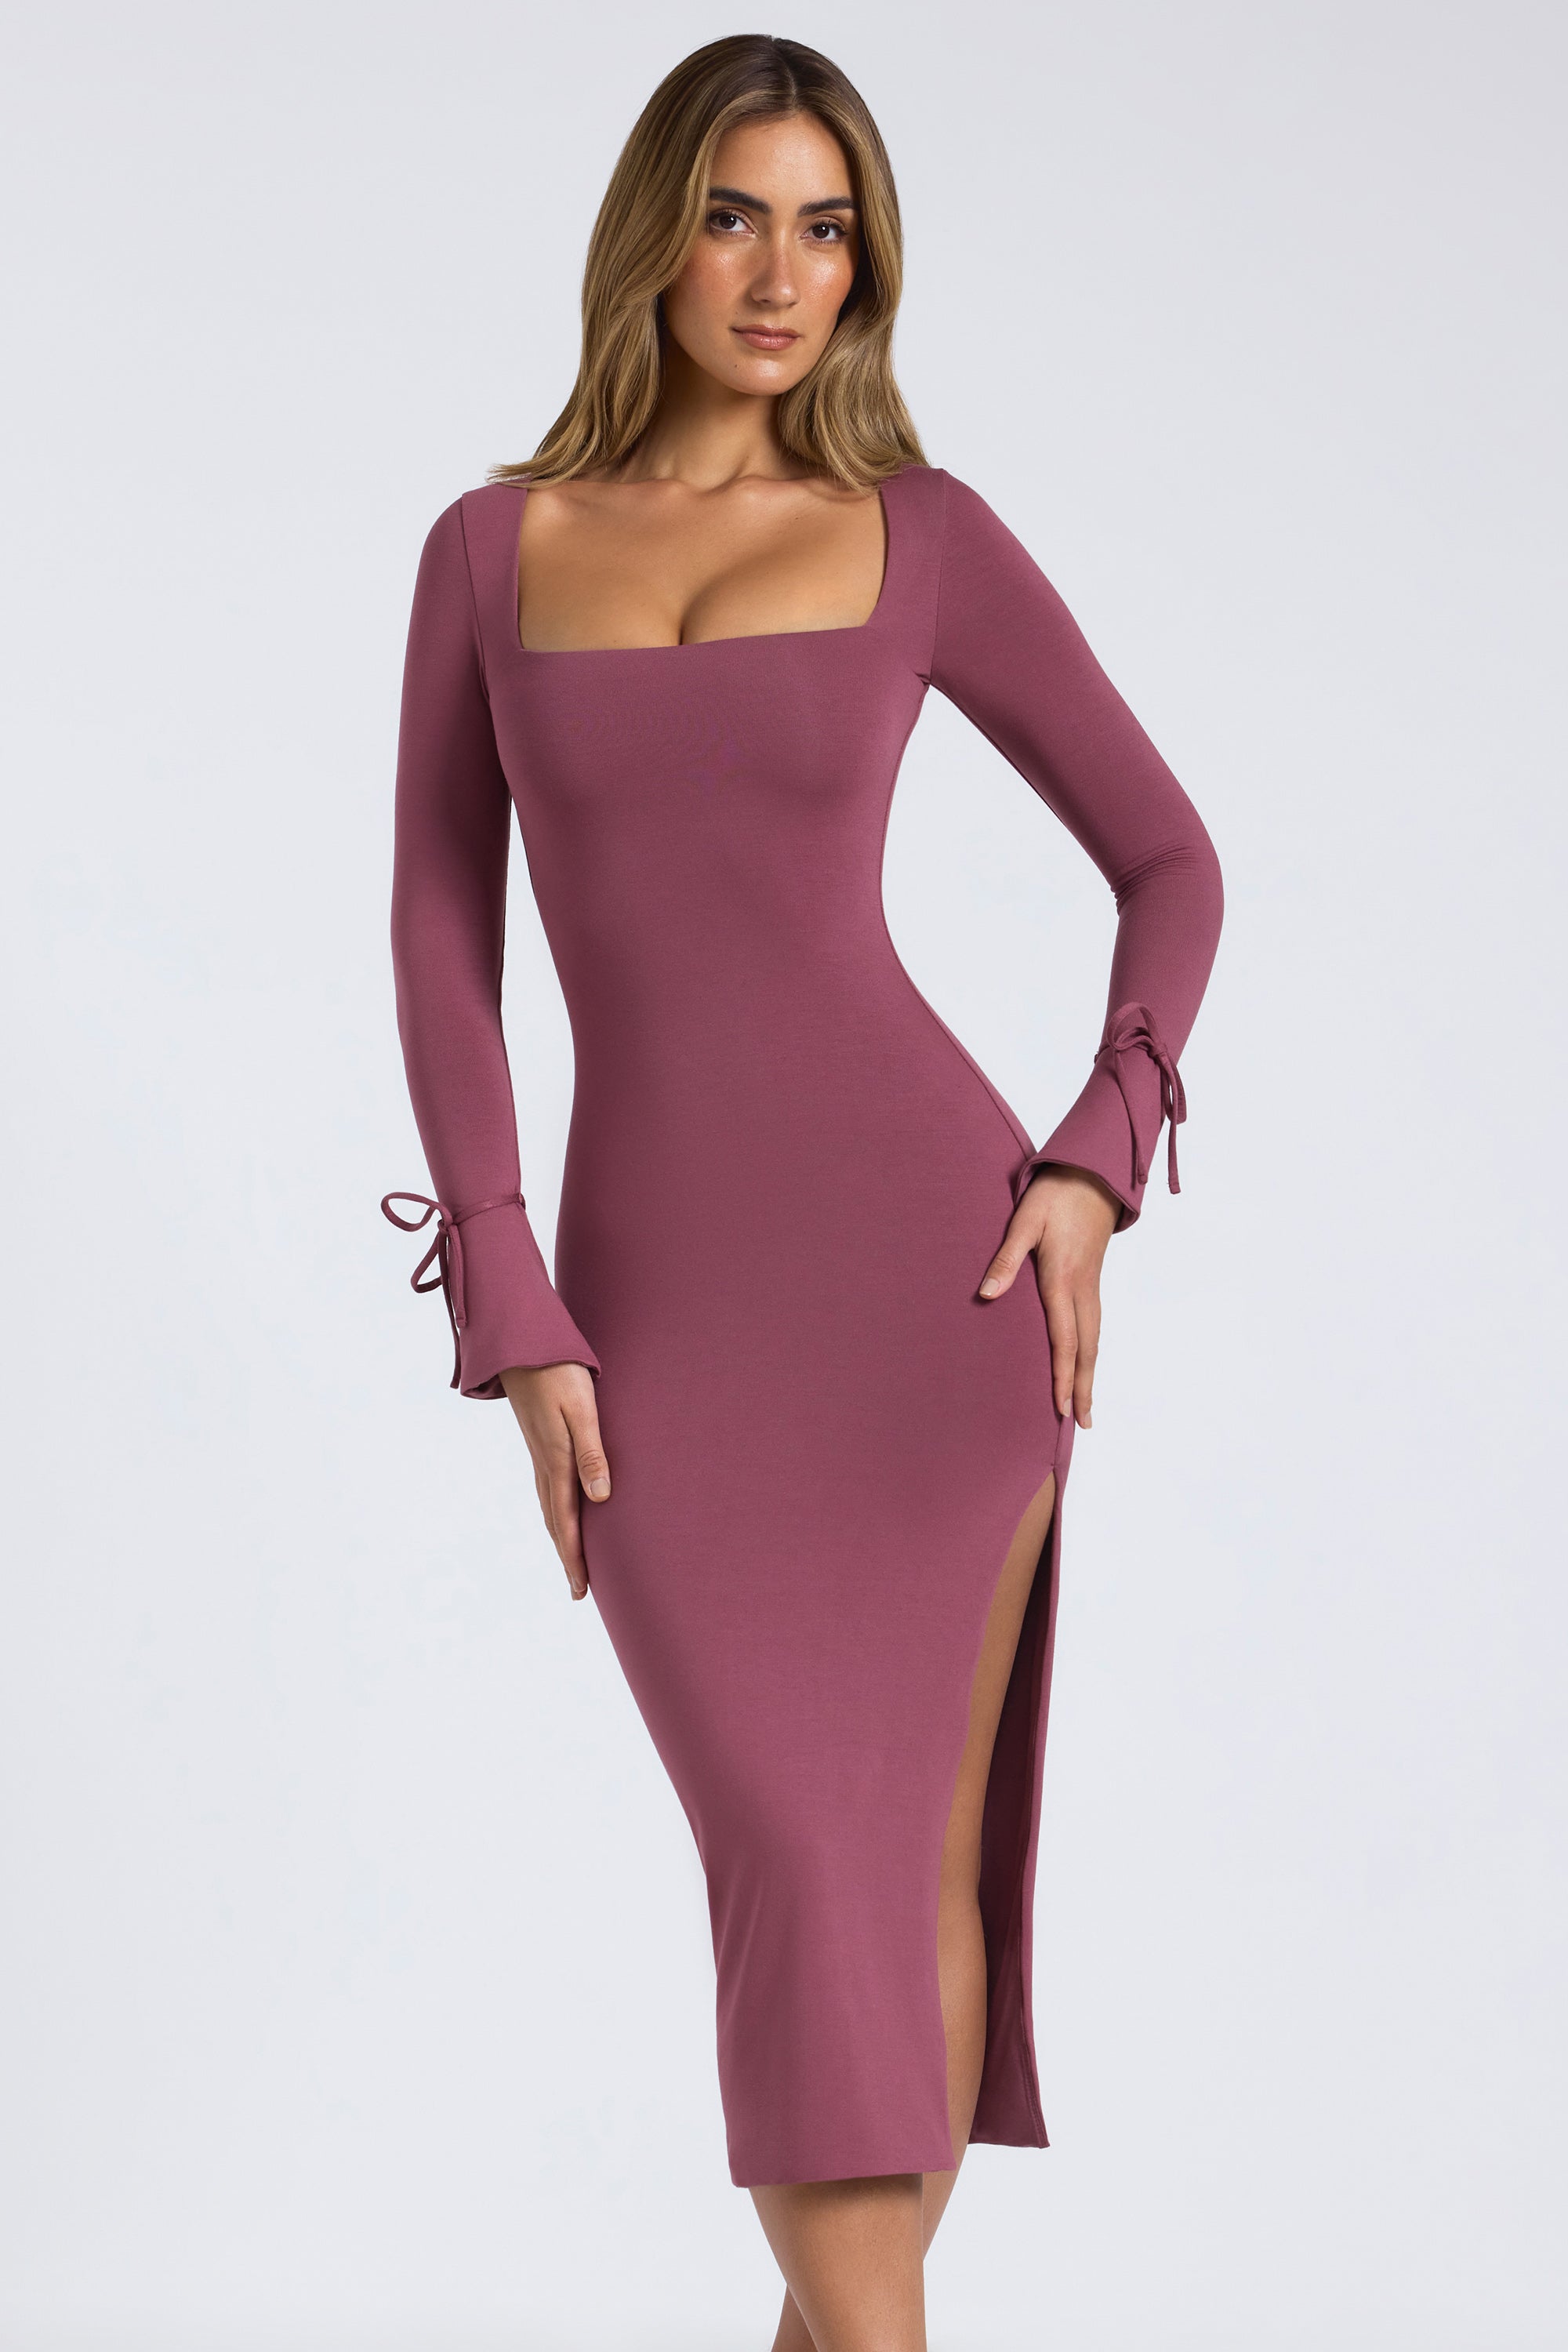 Classic Hot Pink Cocktail Dress - Kellie Nasser